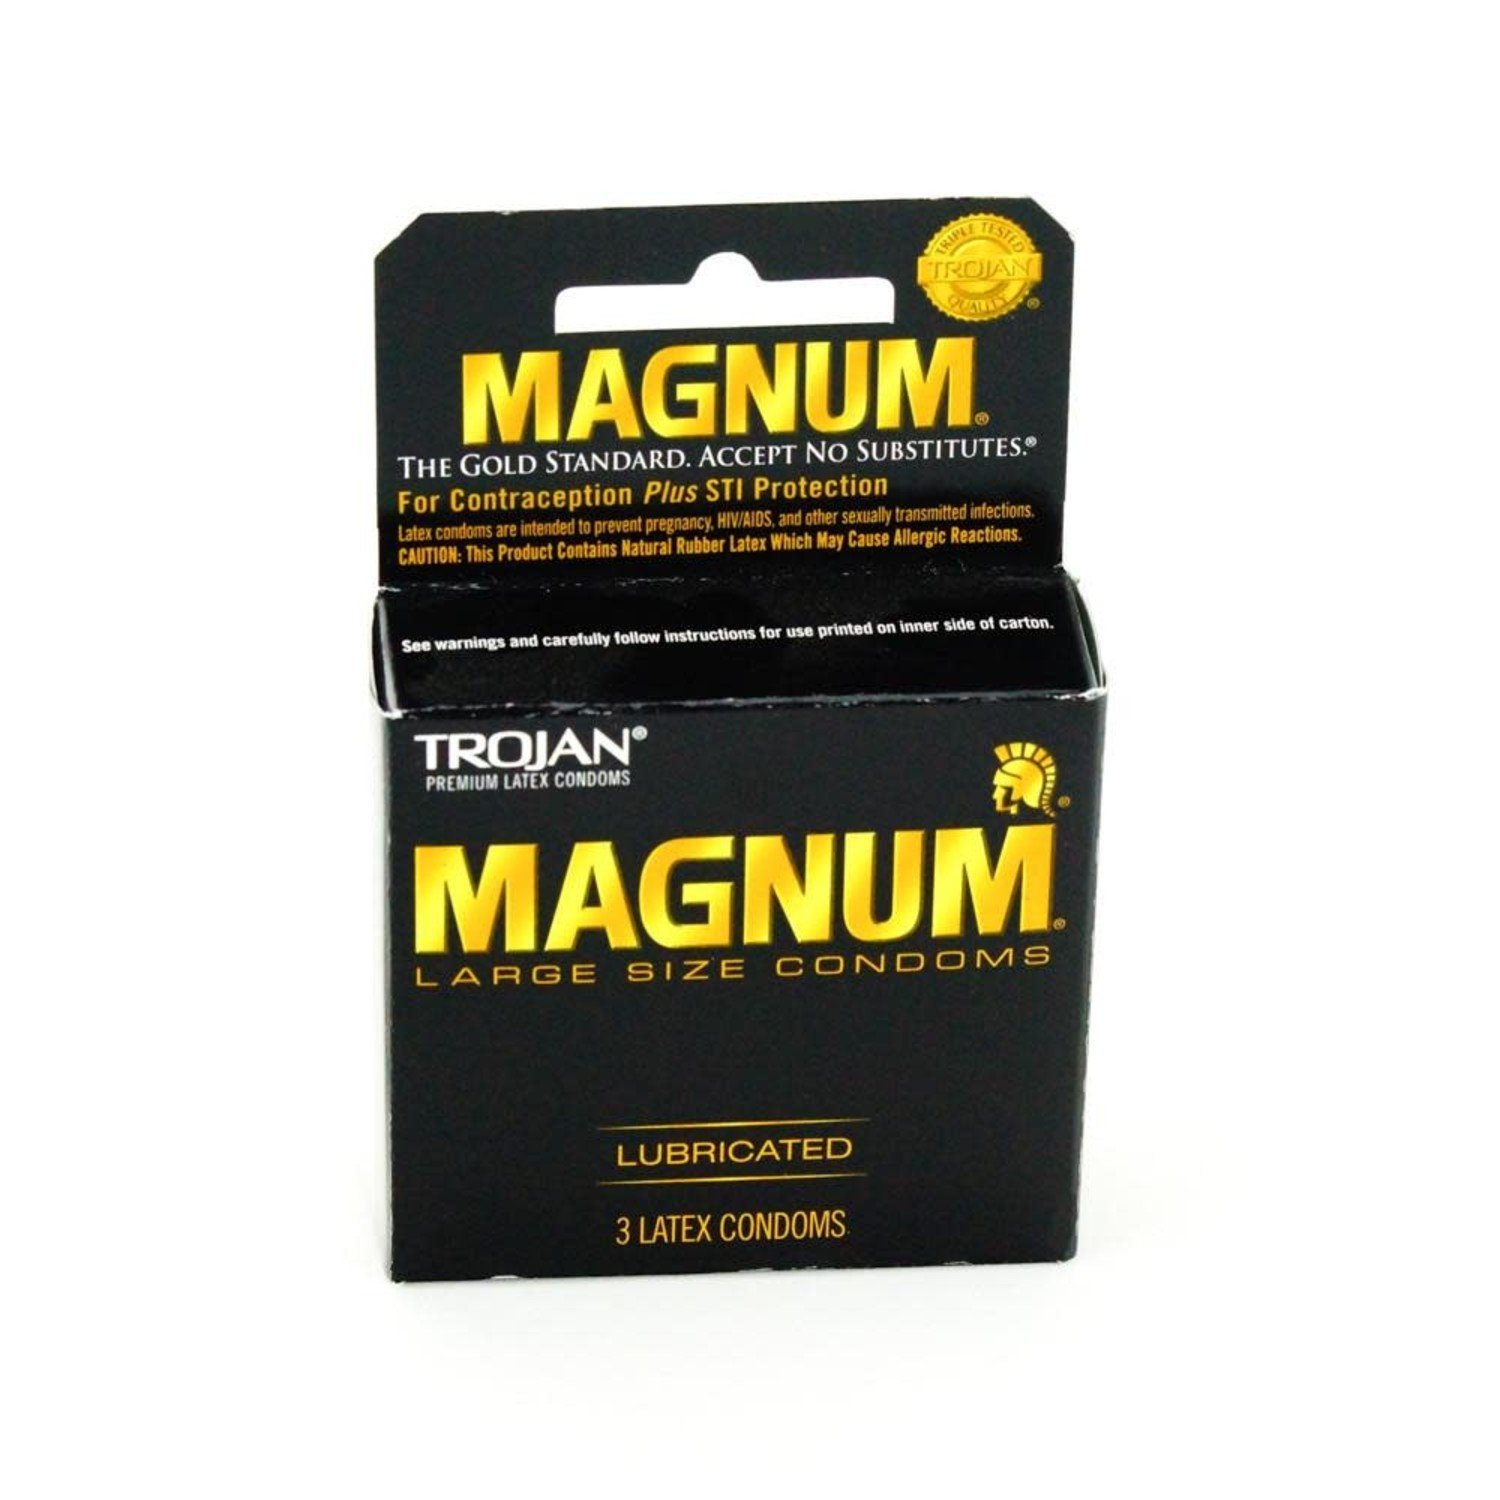 Trojan Magnum Condoms - The Smitten Kitten Inc.